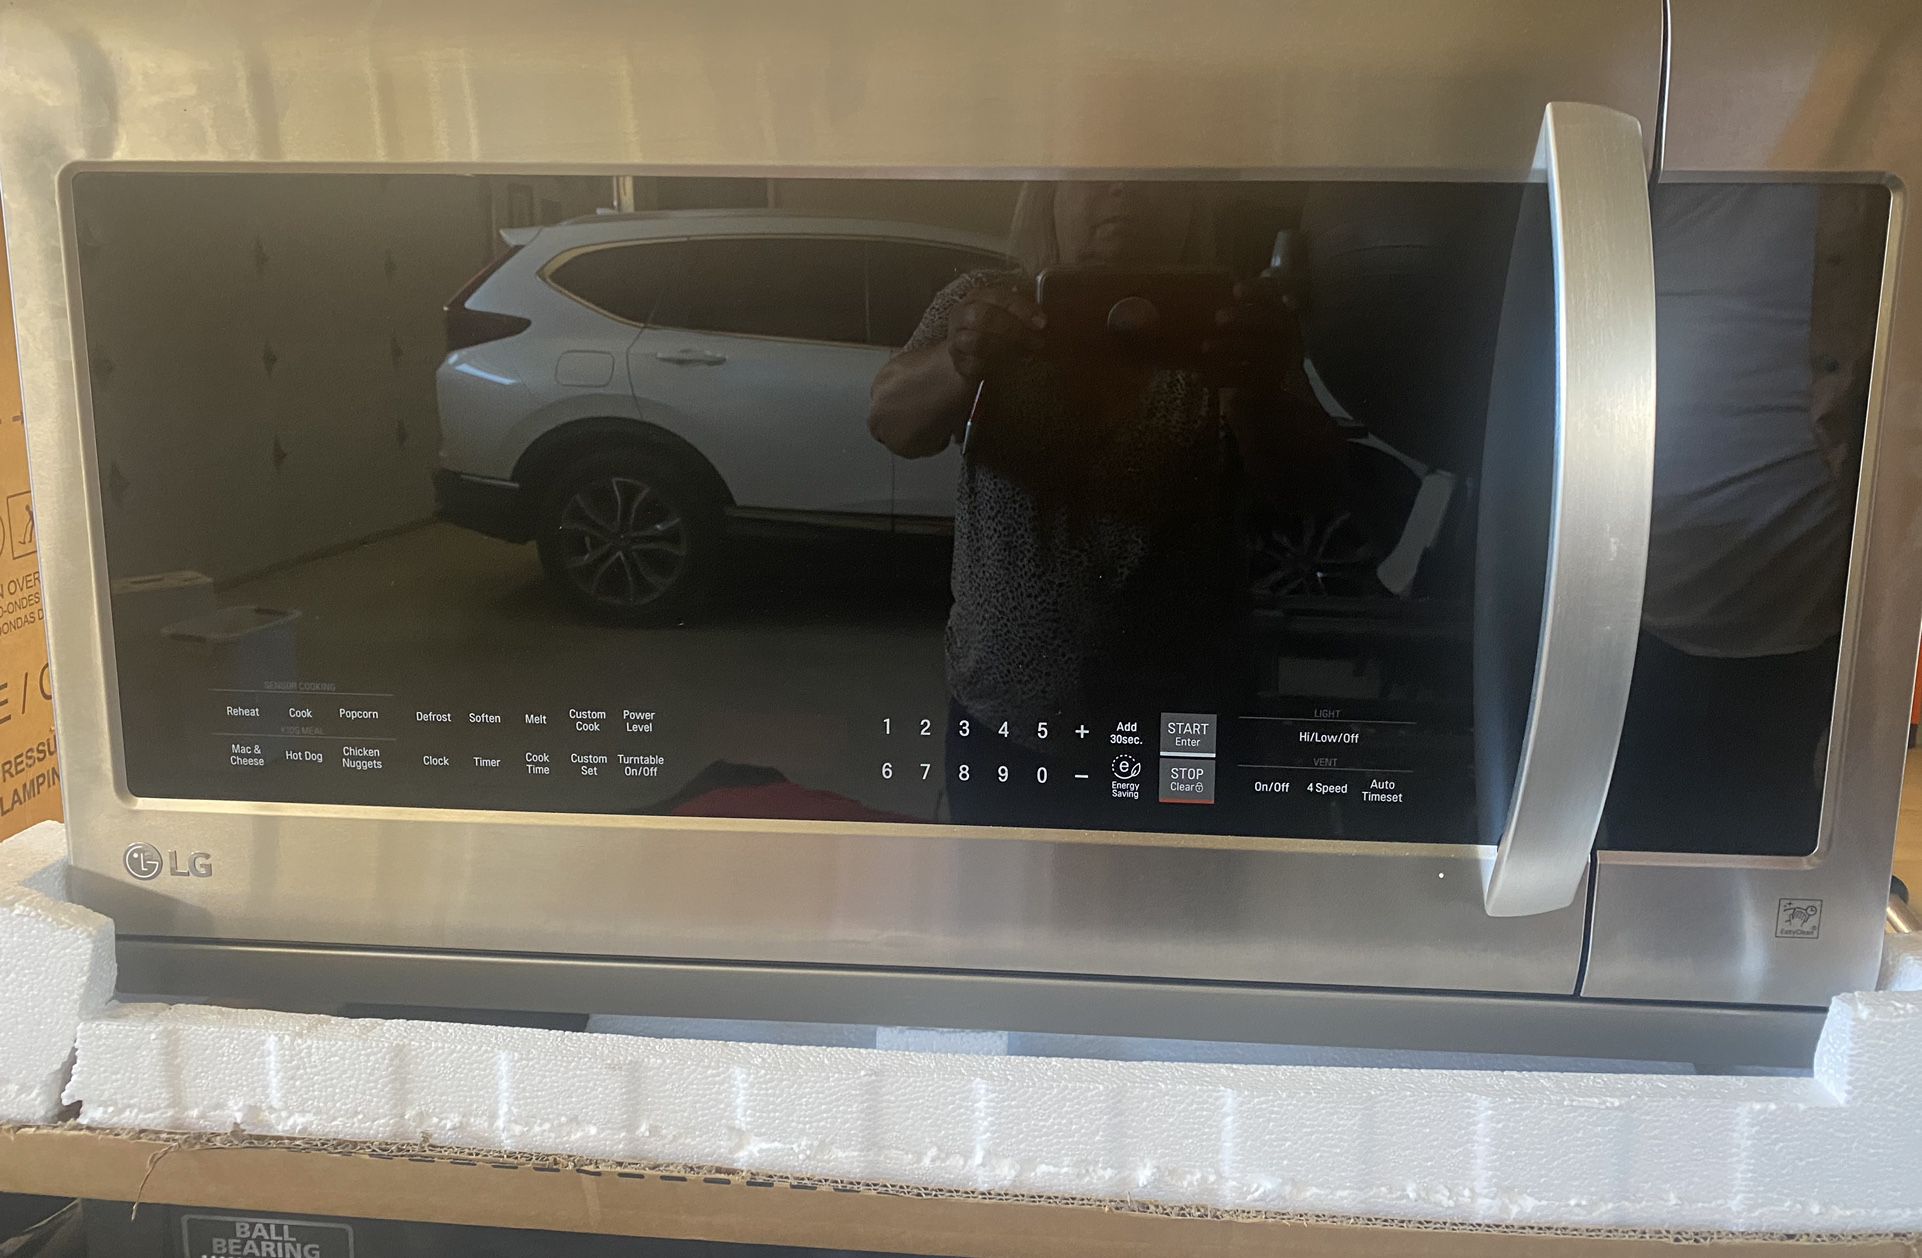 NEW LG Microwave